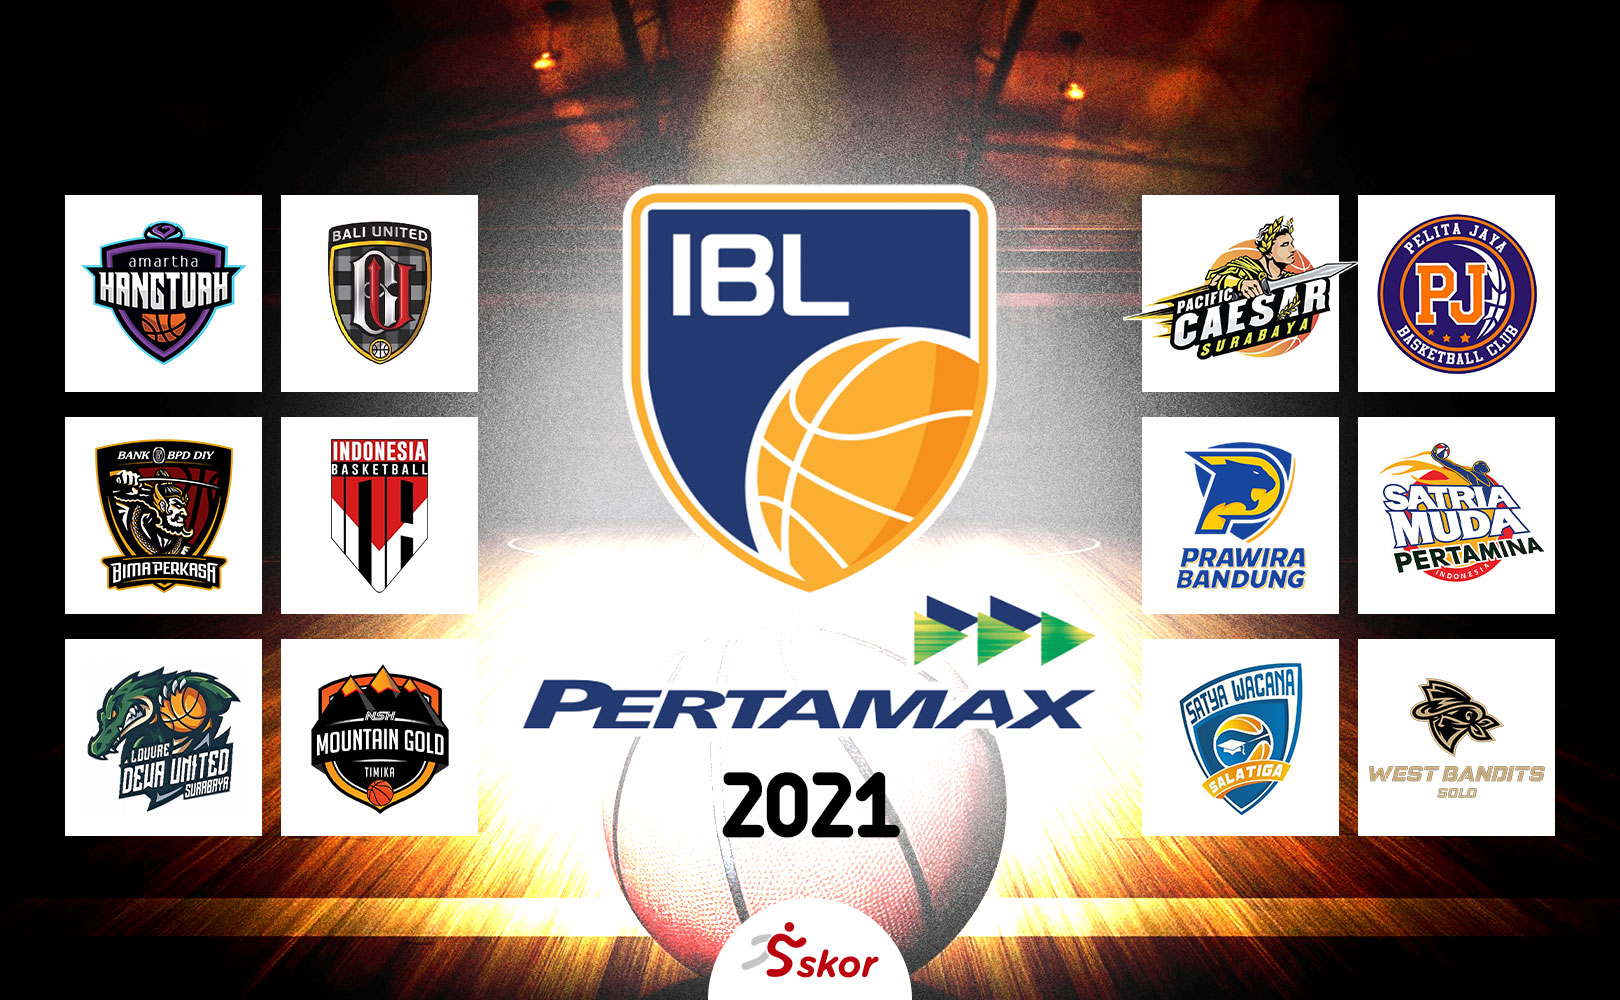 Hasil Playoff IBL 2021: Bungkam Prawira Bandung, West Bandits Solo ke Semifinal